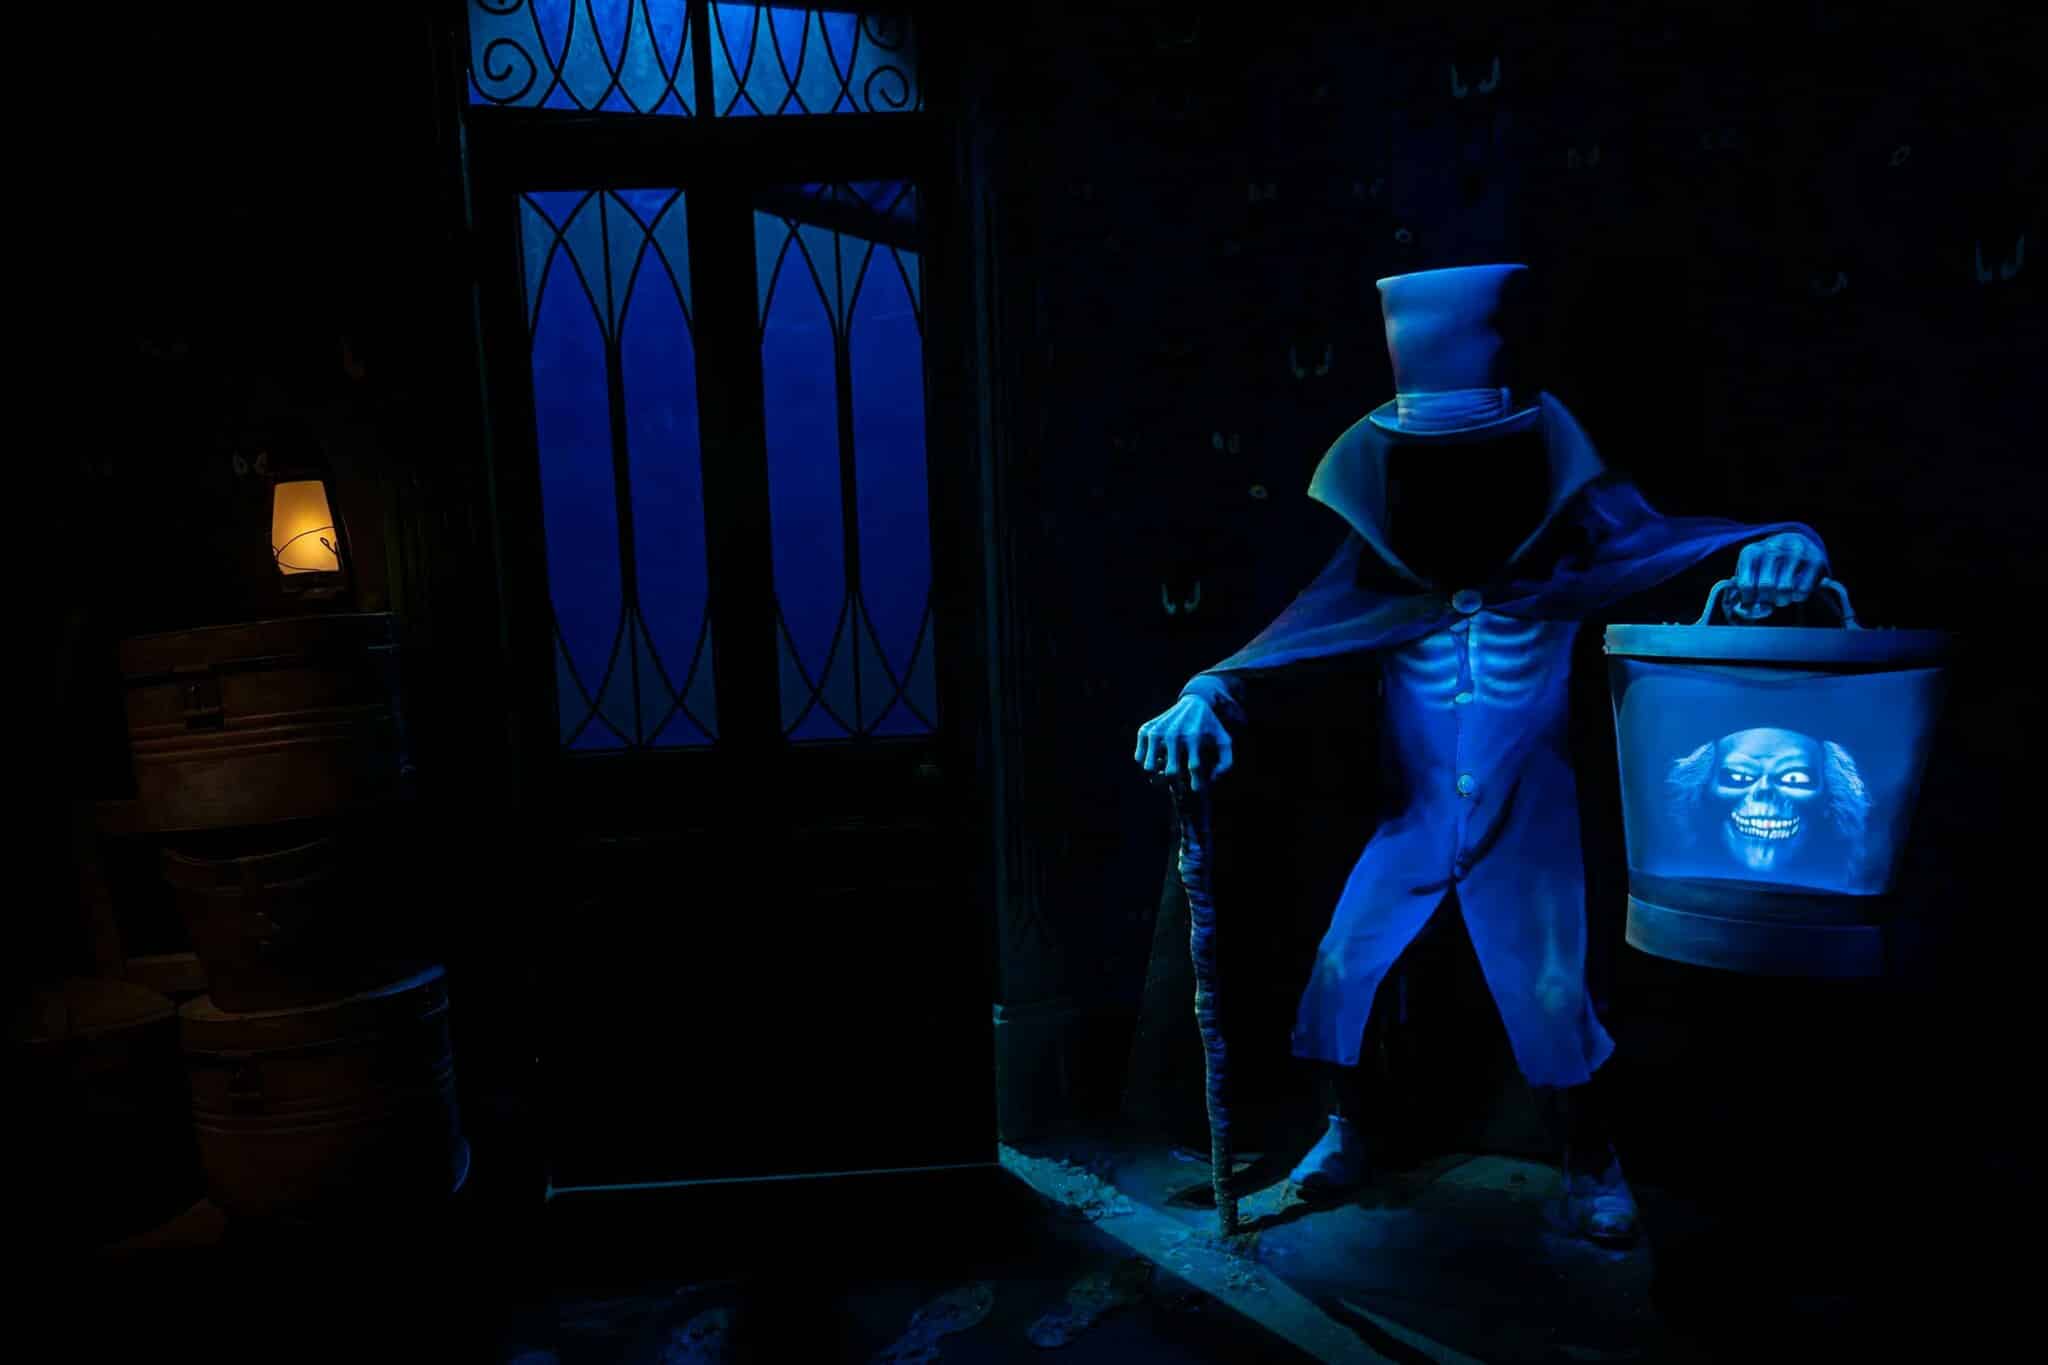 hatbox ghost haunted mansion film